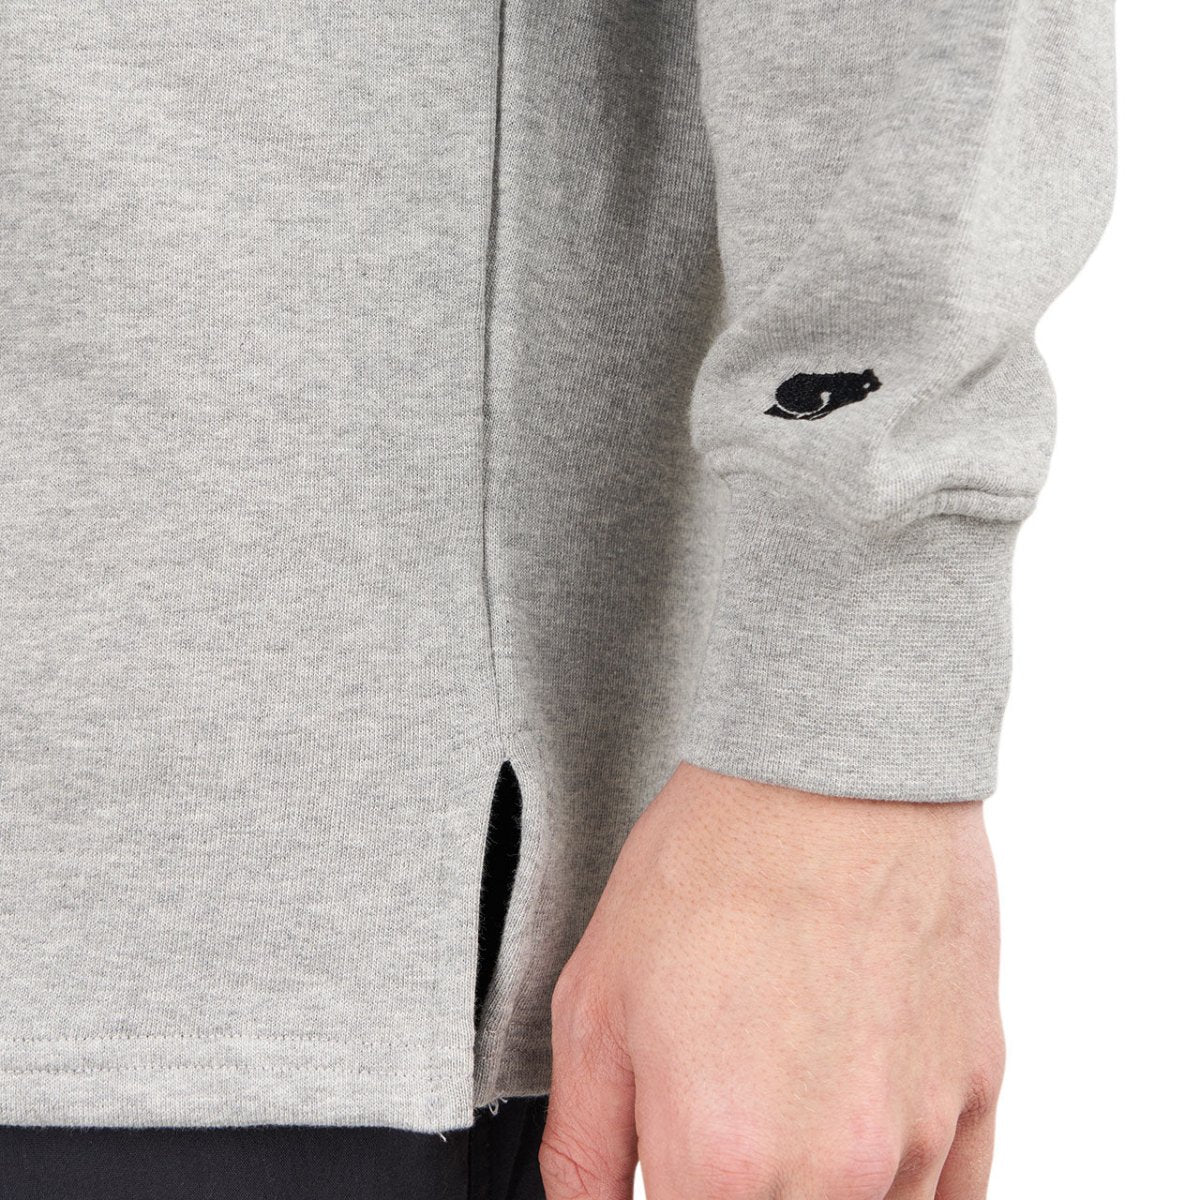 Karhu Uni Stripe Sweatshirt (Grau / Grün)  - Allike Store